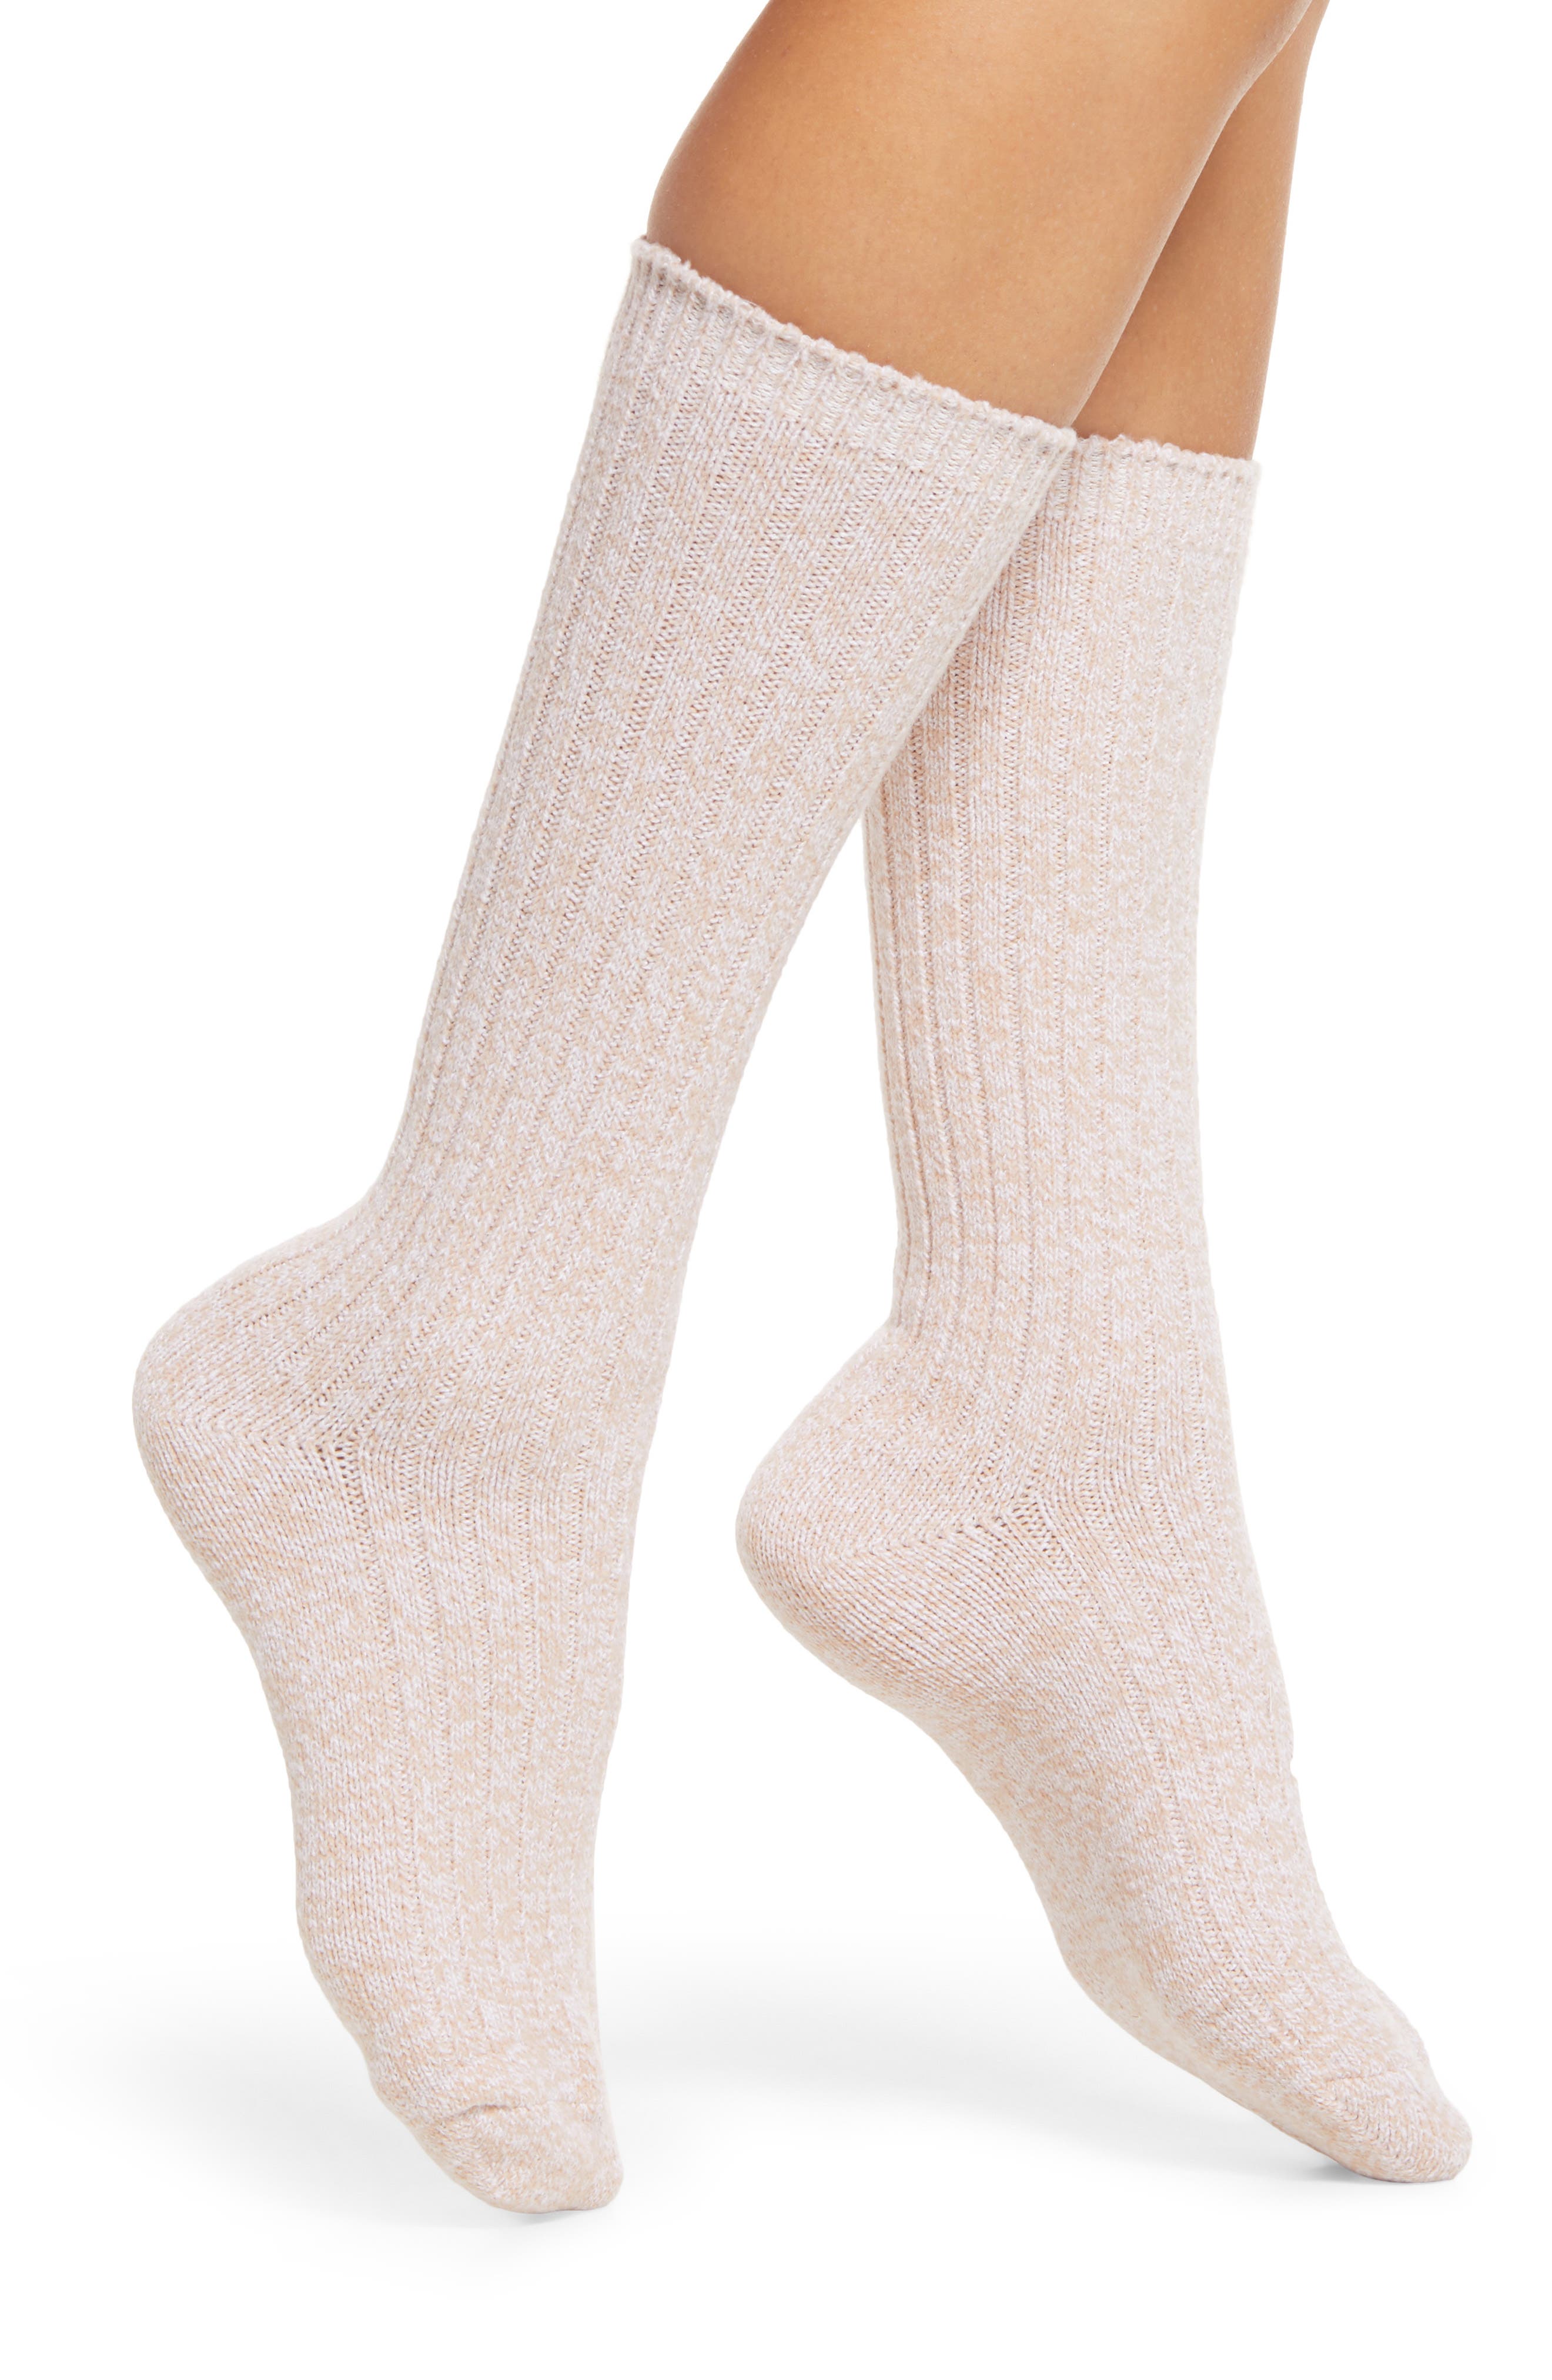 6 Pairs Ladies Plain Black White Socks Womens Girls Cotton Blend Lycra Adult 4-6